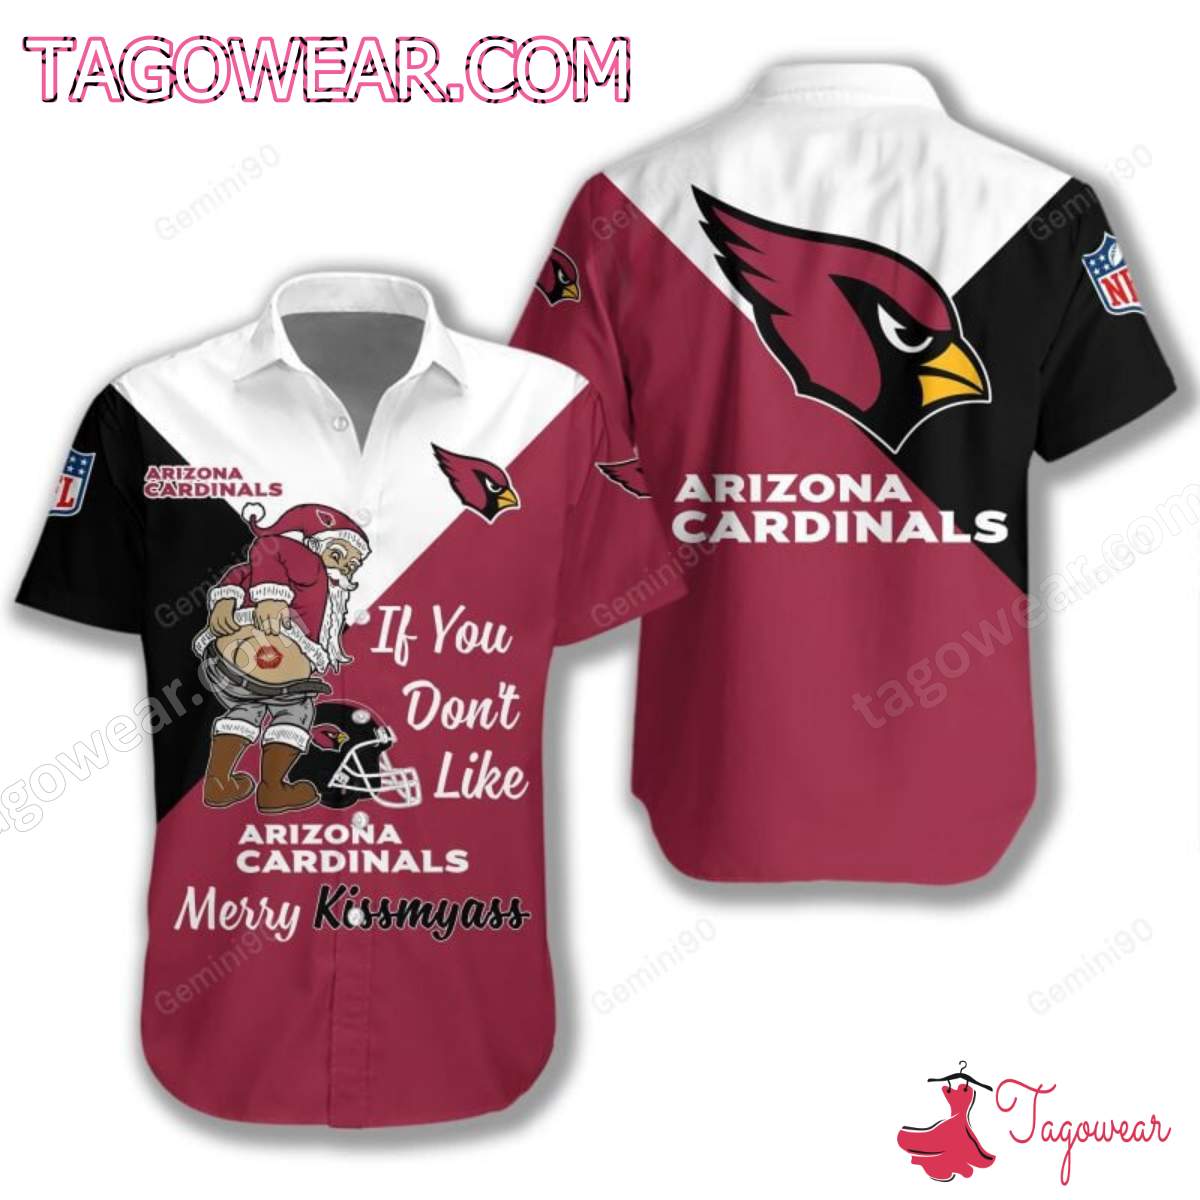 If You Don't Like Arizona Cardinals Merry Kissmyass T-shirt, Polo, Hoodie a